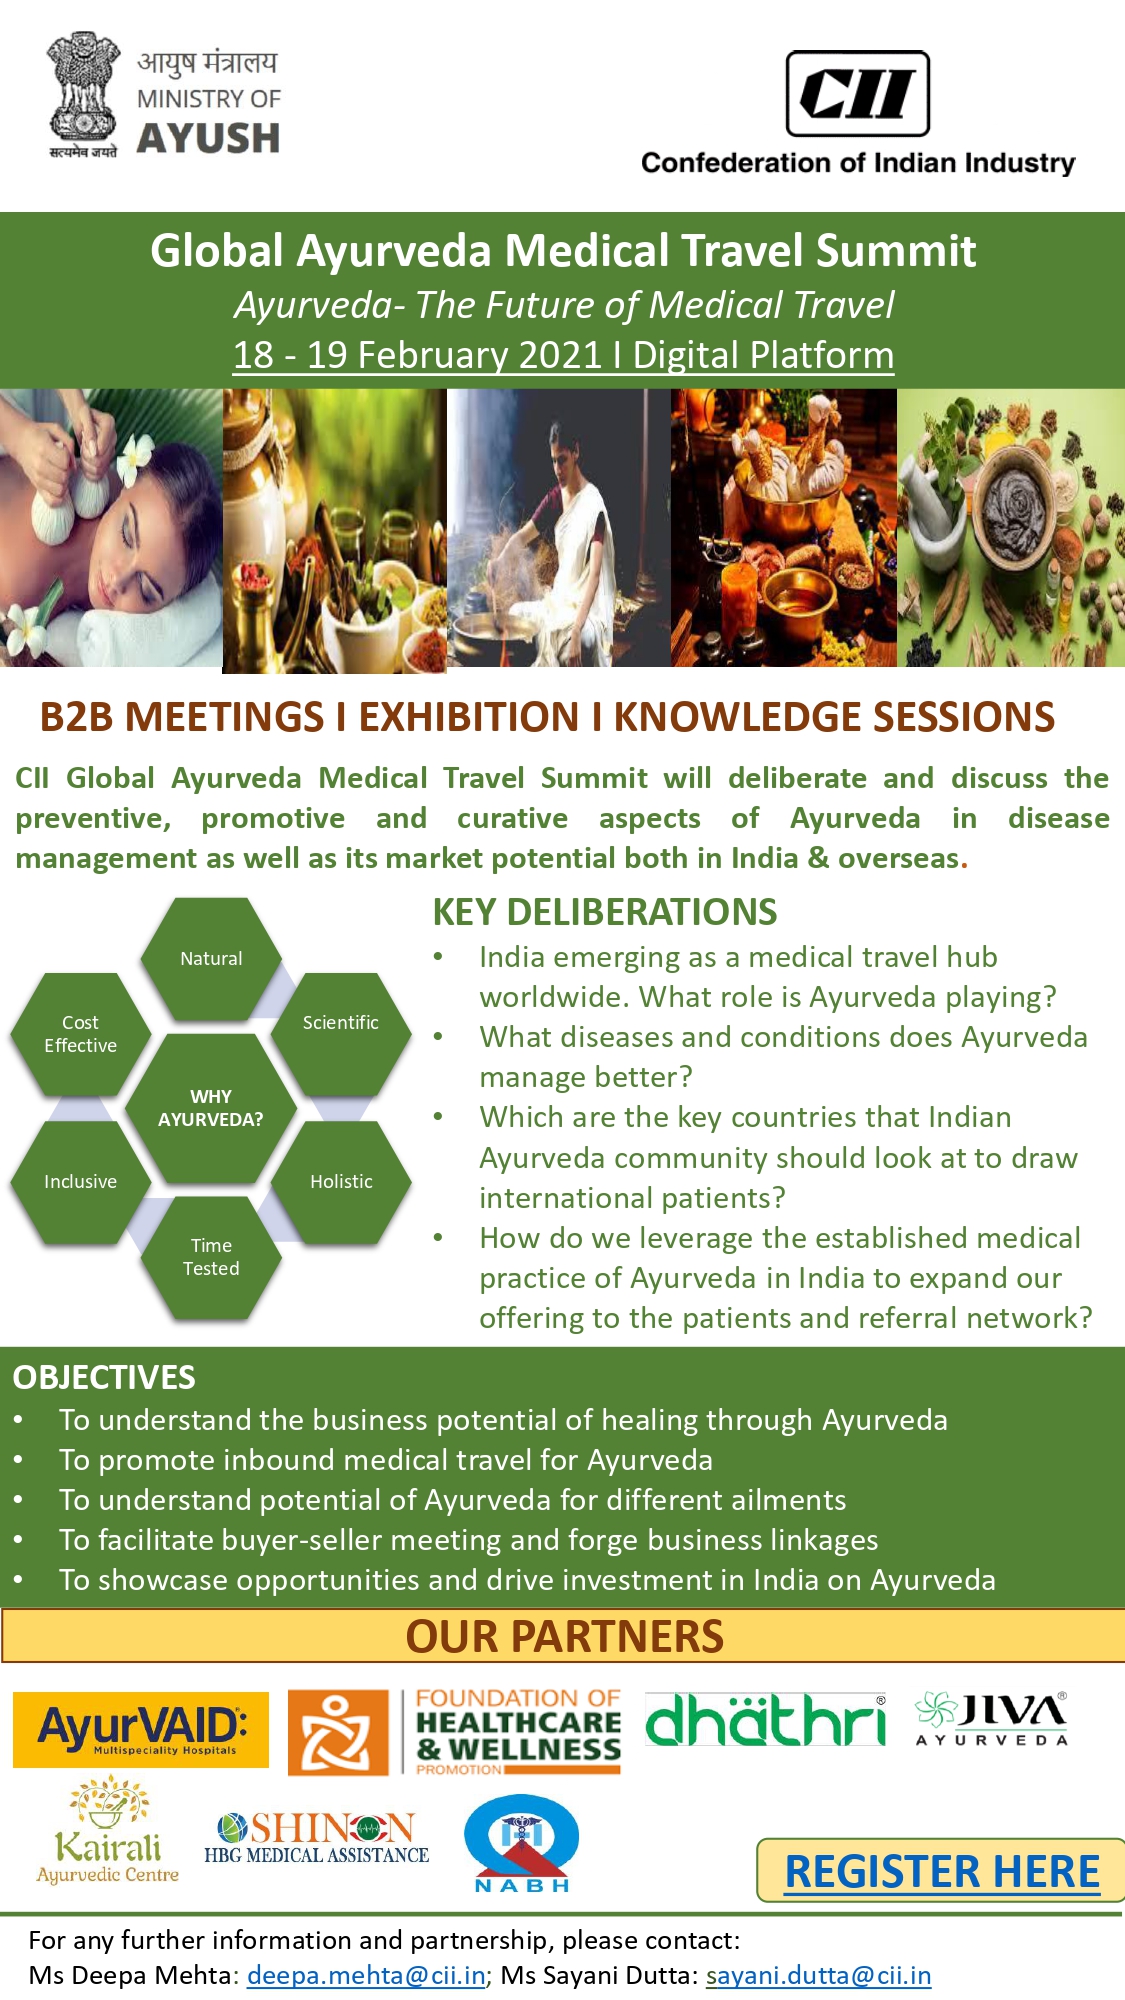 Global Ayurveda Medical Travel Summit  Ayurveda - The Future of Medical Travel  18 - 19 February 2021 : 1500 - 2100 hrs : CII Digital Platform